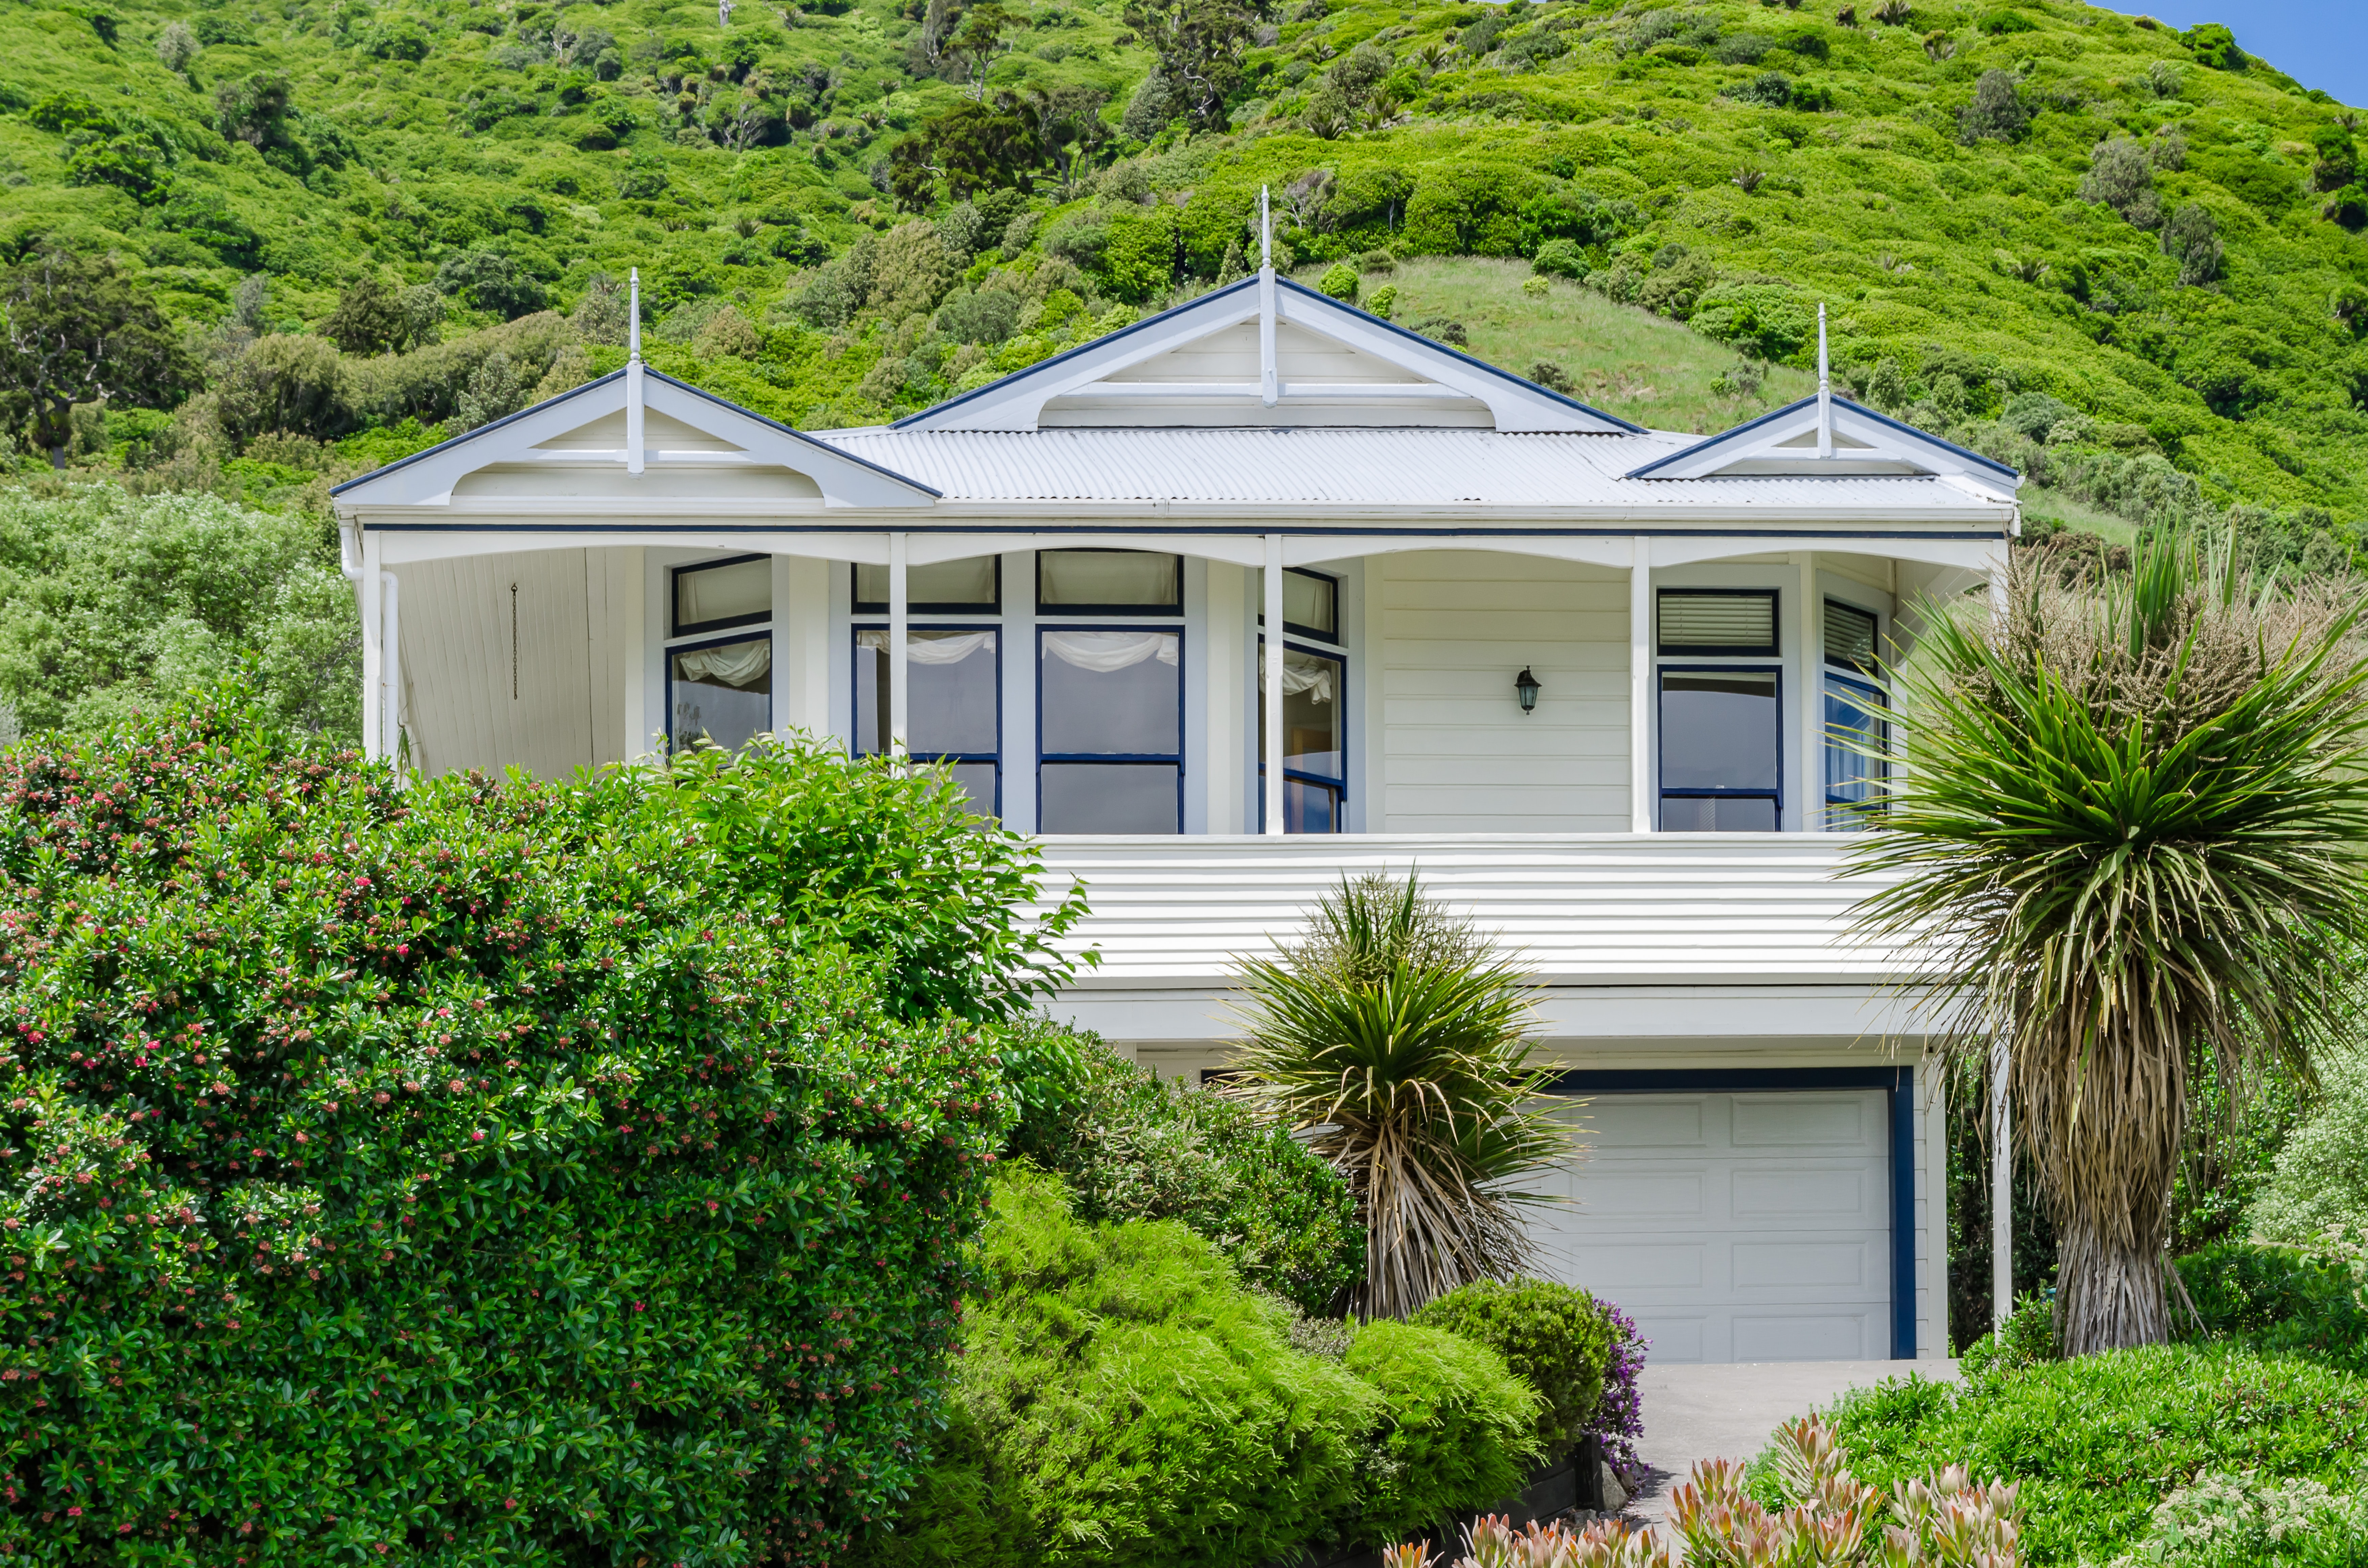 A beautiful New Zealand home